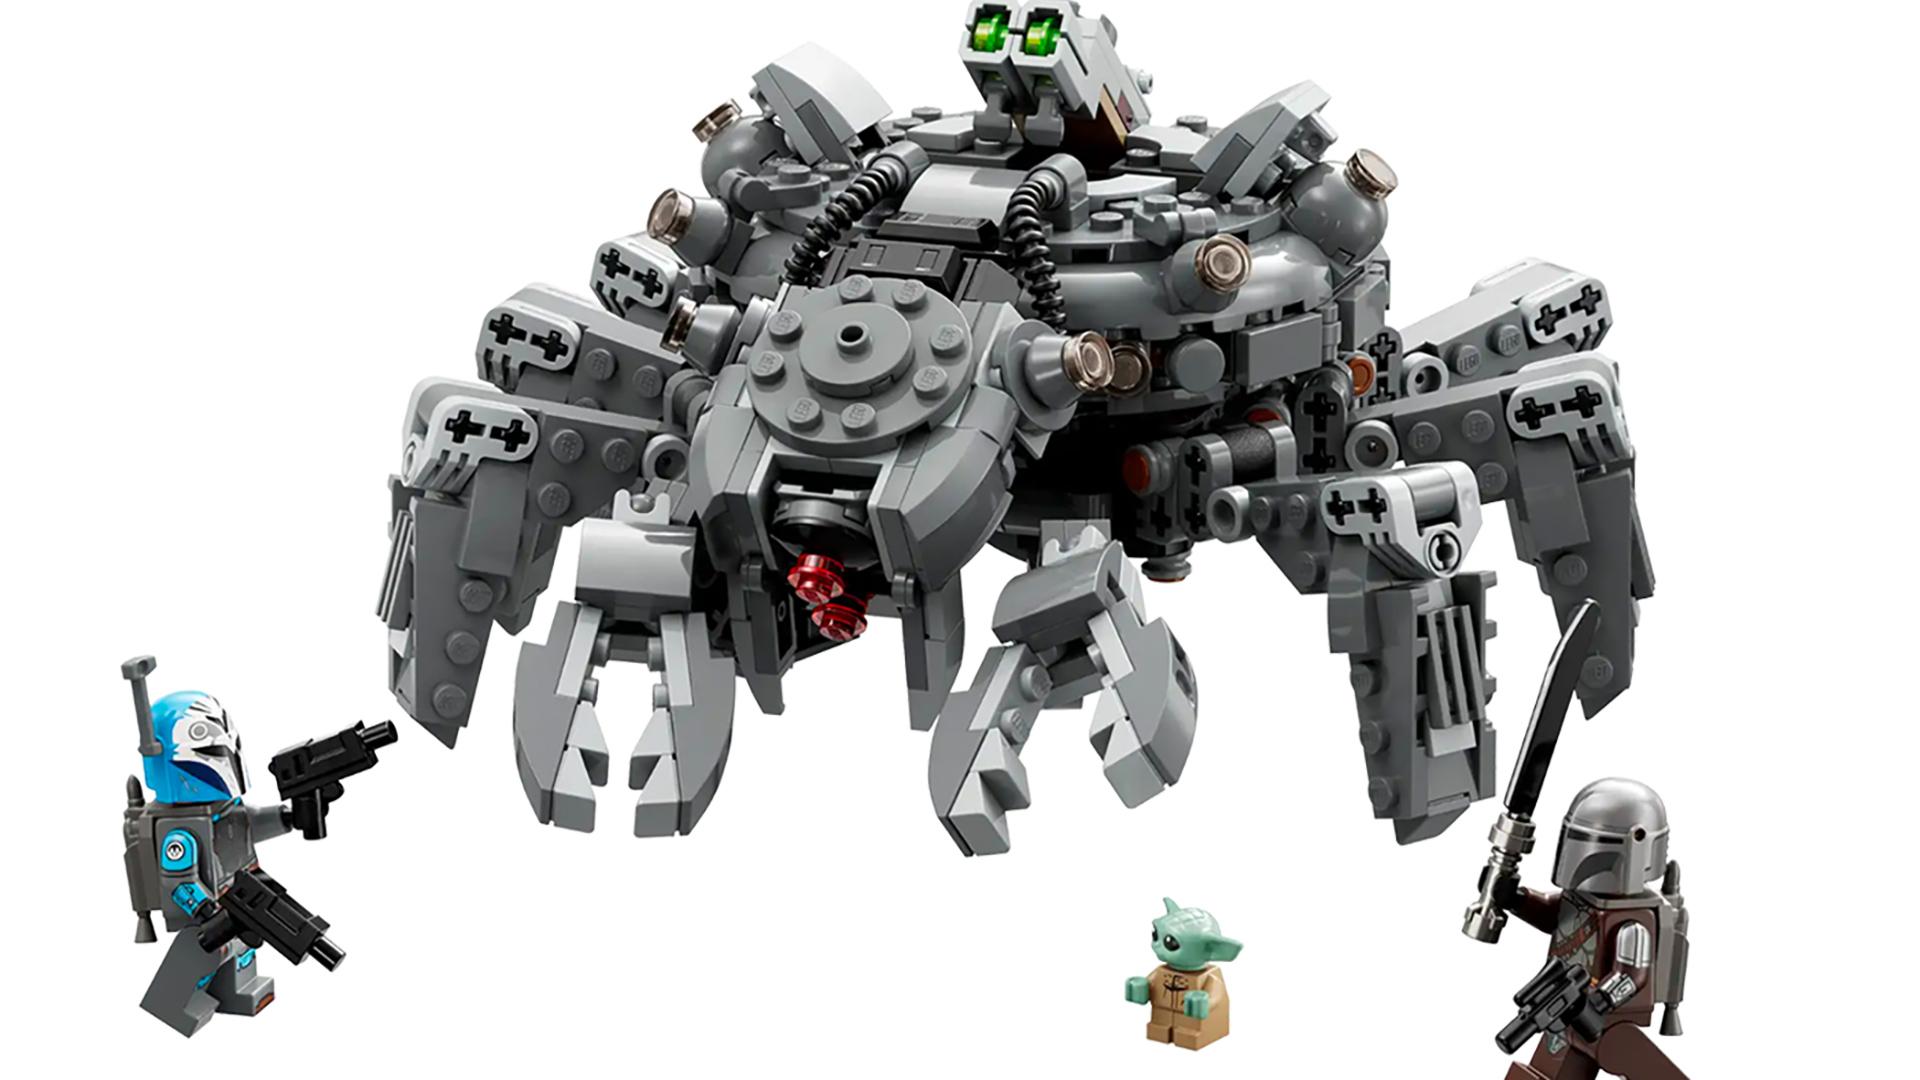 vriendelijke groet Trots Refrein LEGO Star Wars onthult The Mandalorian Spider Tank-set - JFK